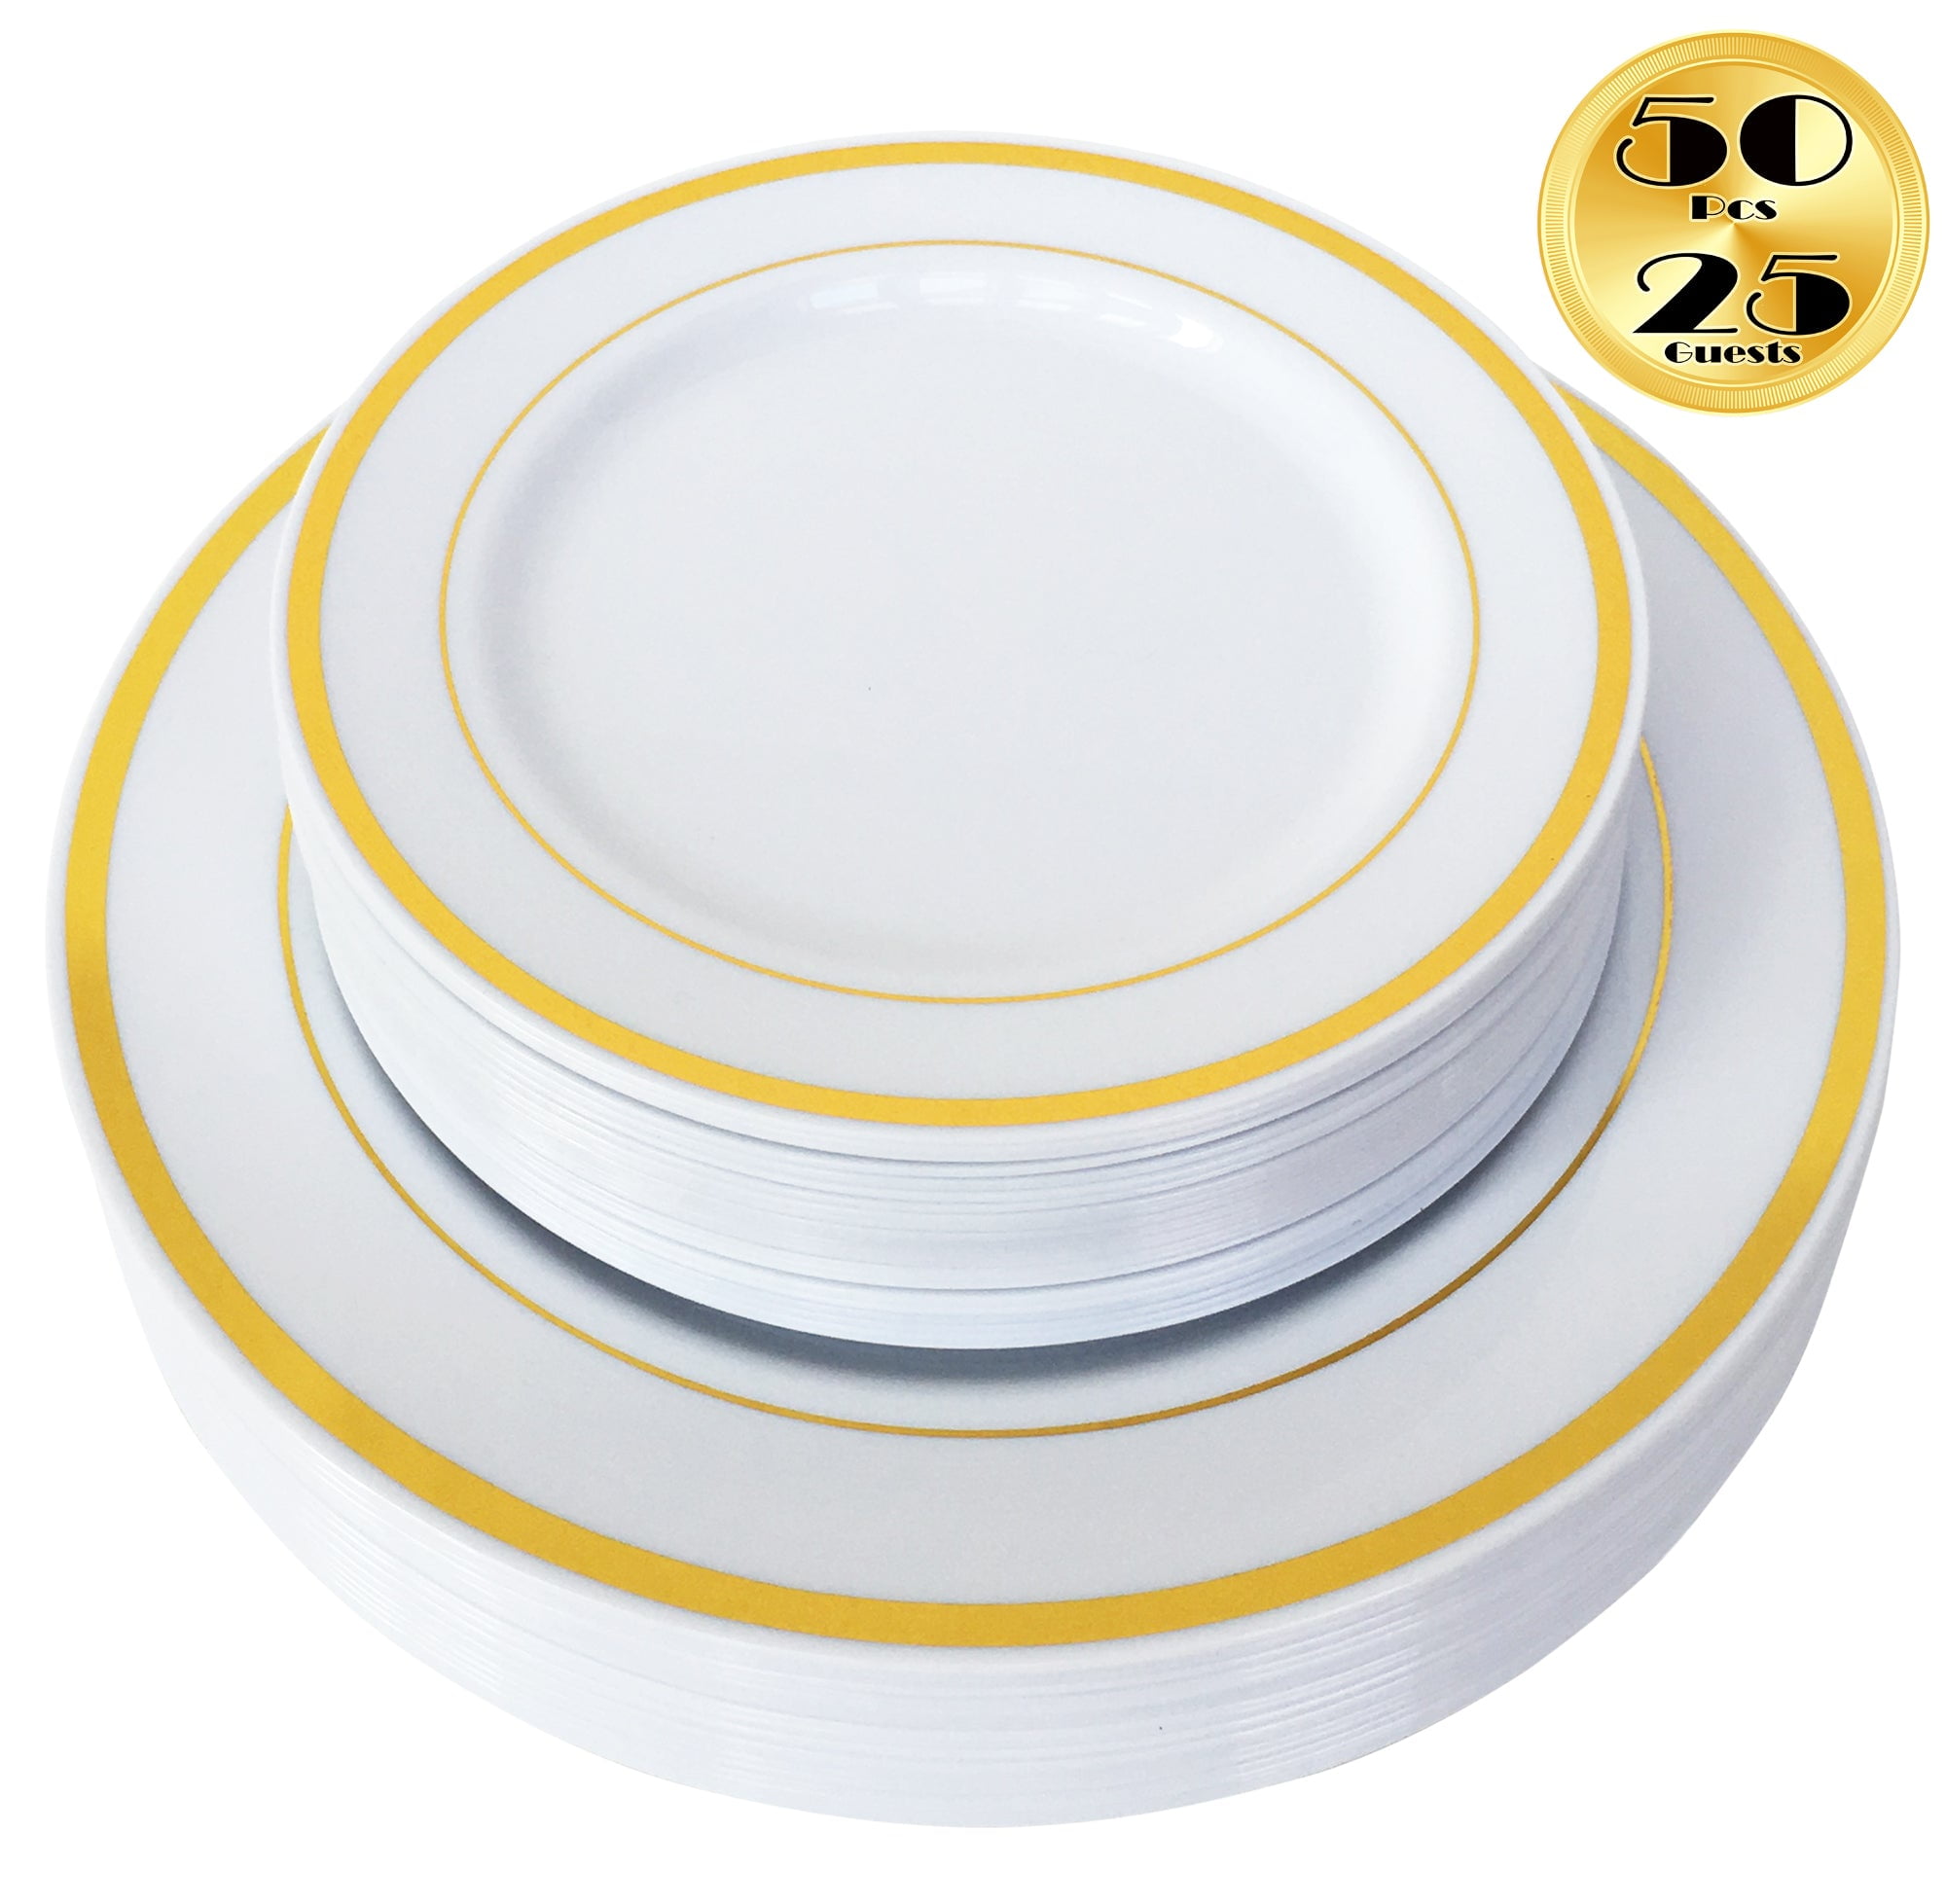 50 Guests Wedding 350 Piece Premium Disposable Tableware Set Party Plates 